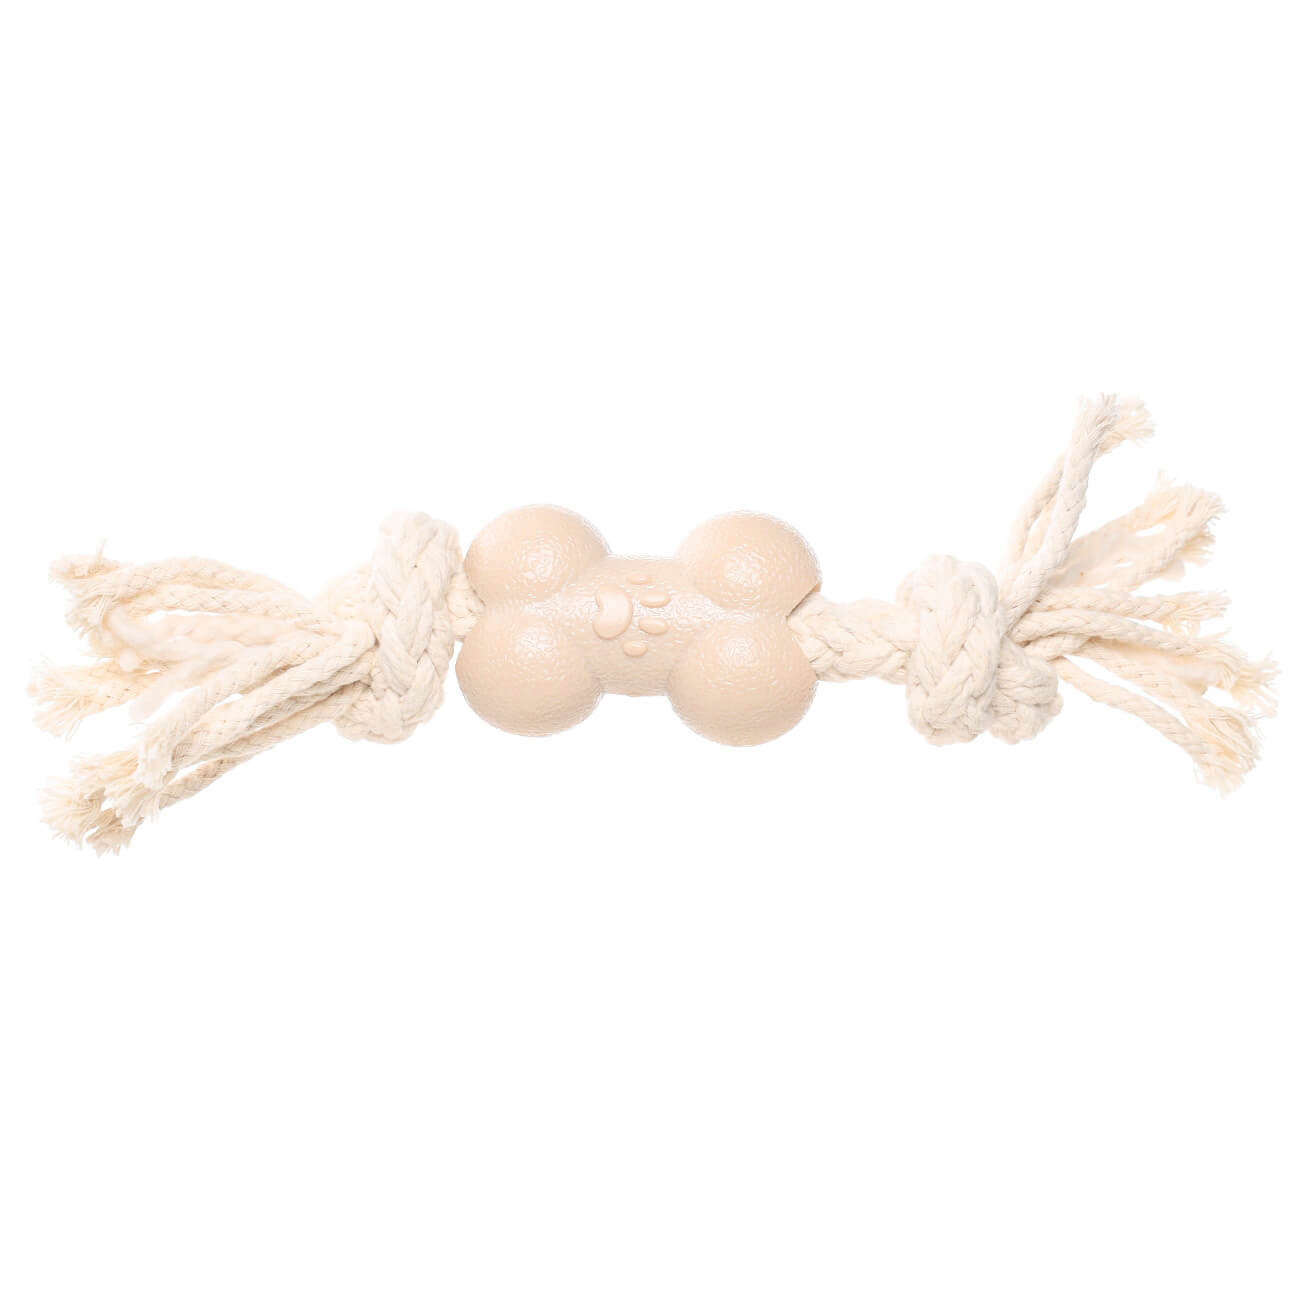 Dog toy, 21 cm, rubber / cotton, Beige, Bone on rope, Playful pet изображение № 1